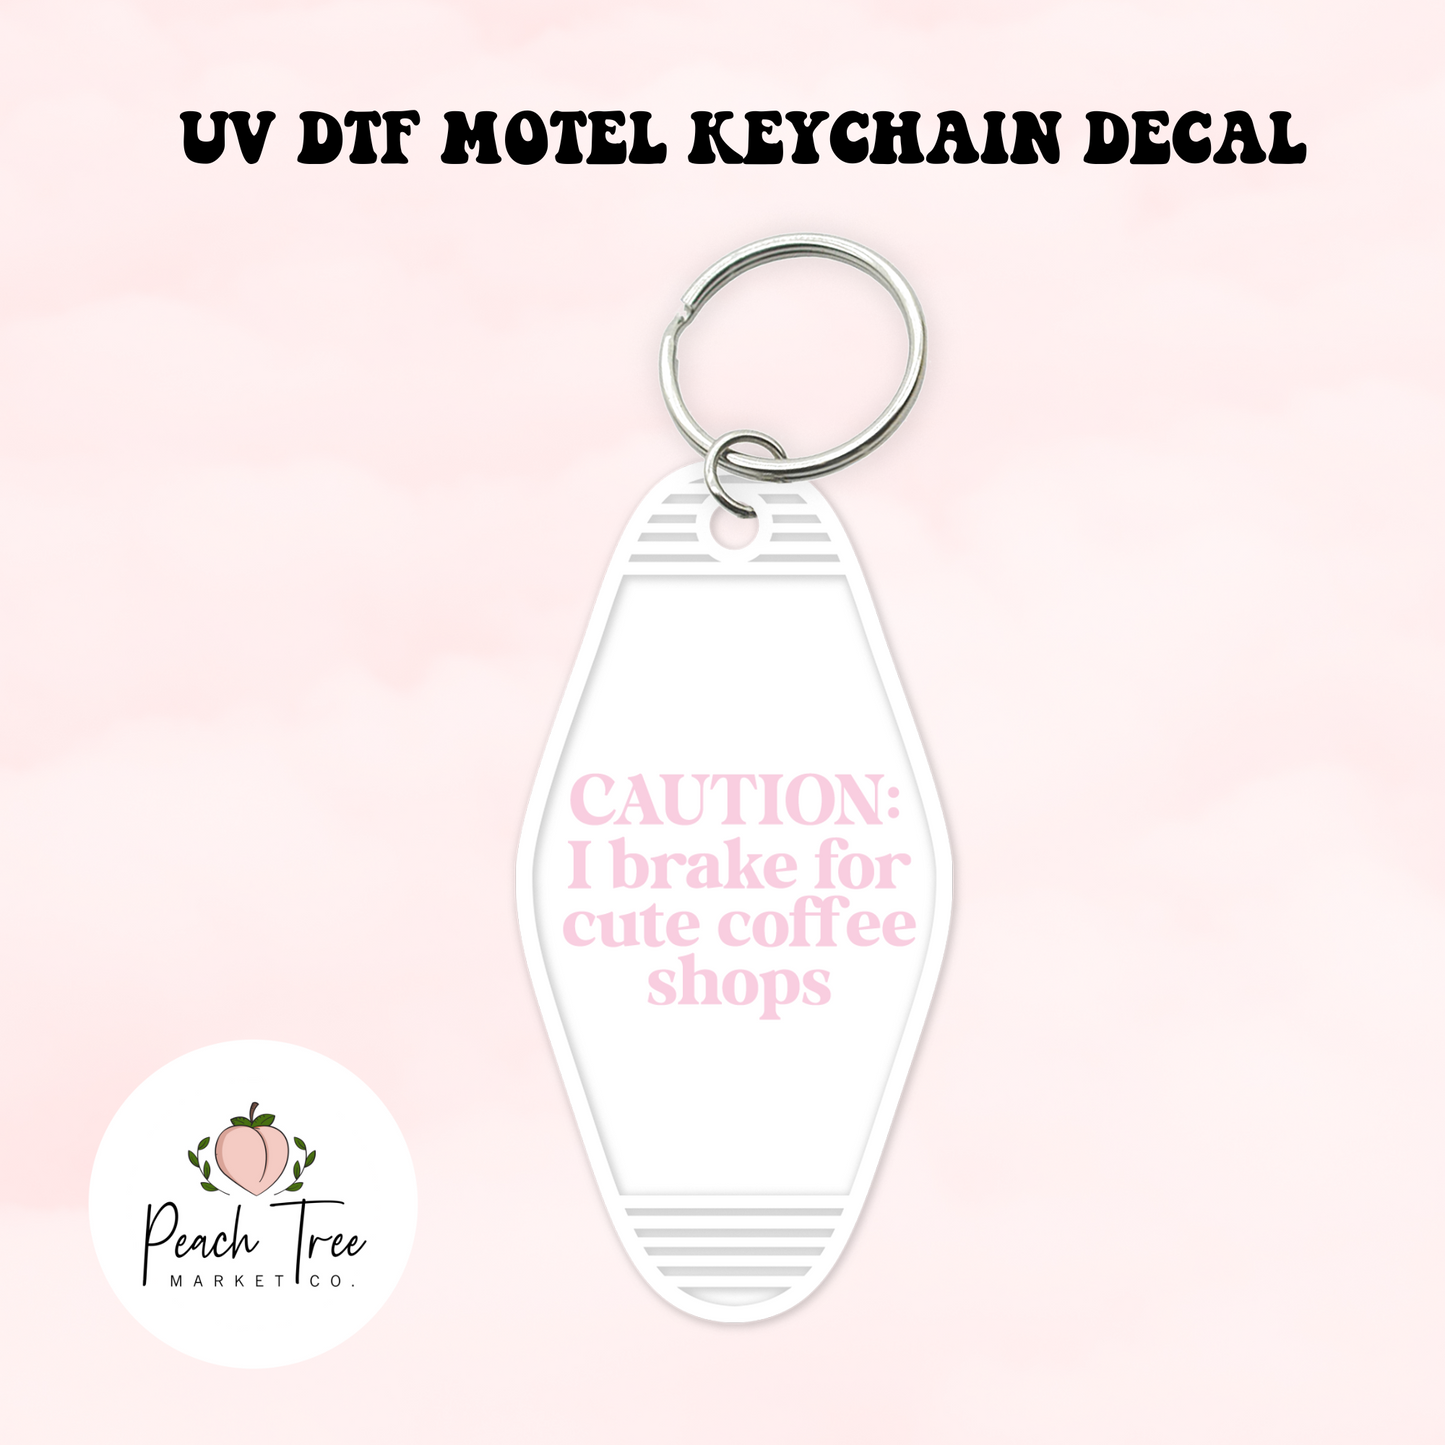 Caution UV DTF Motel Keychain Decal